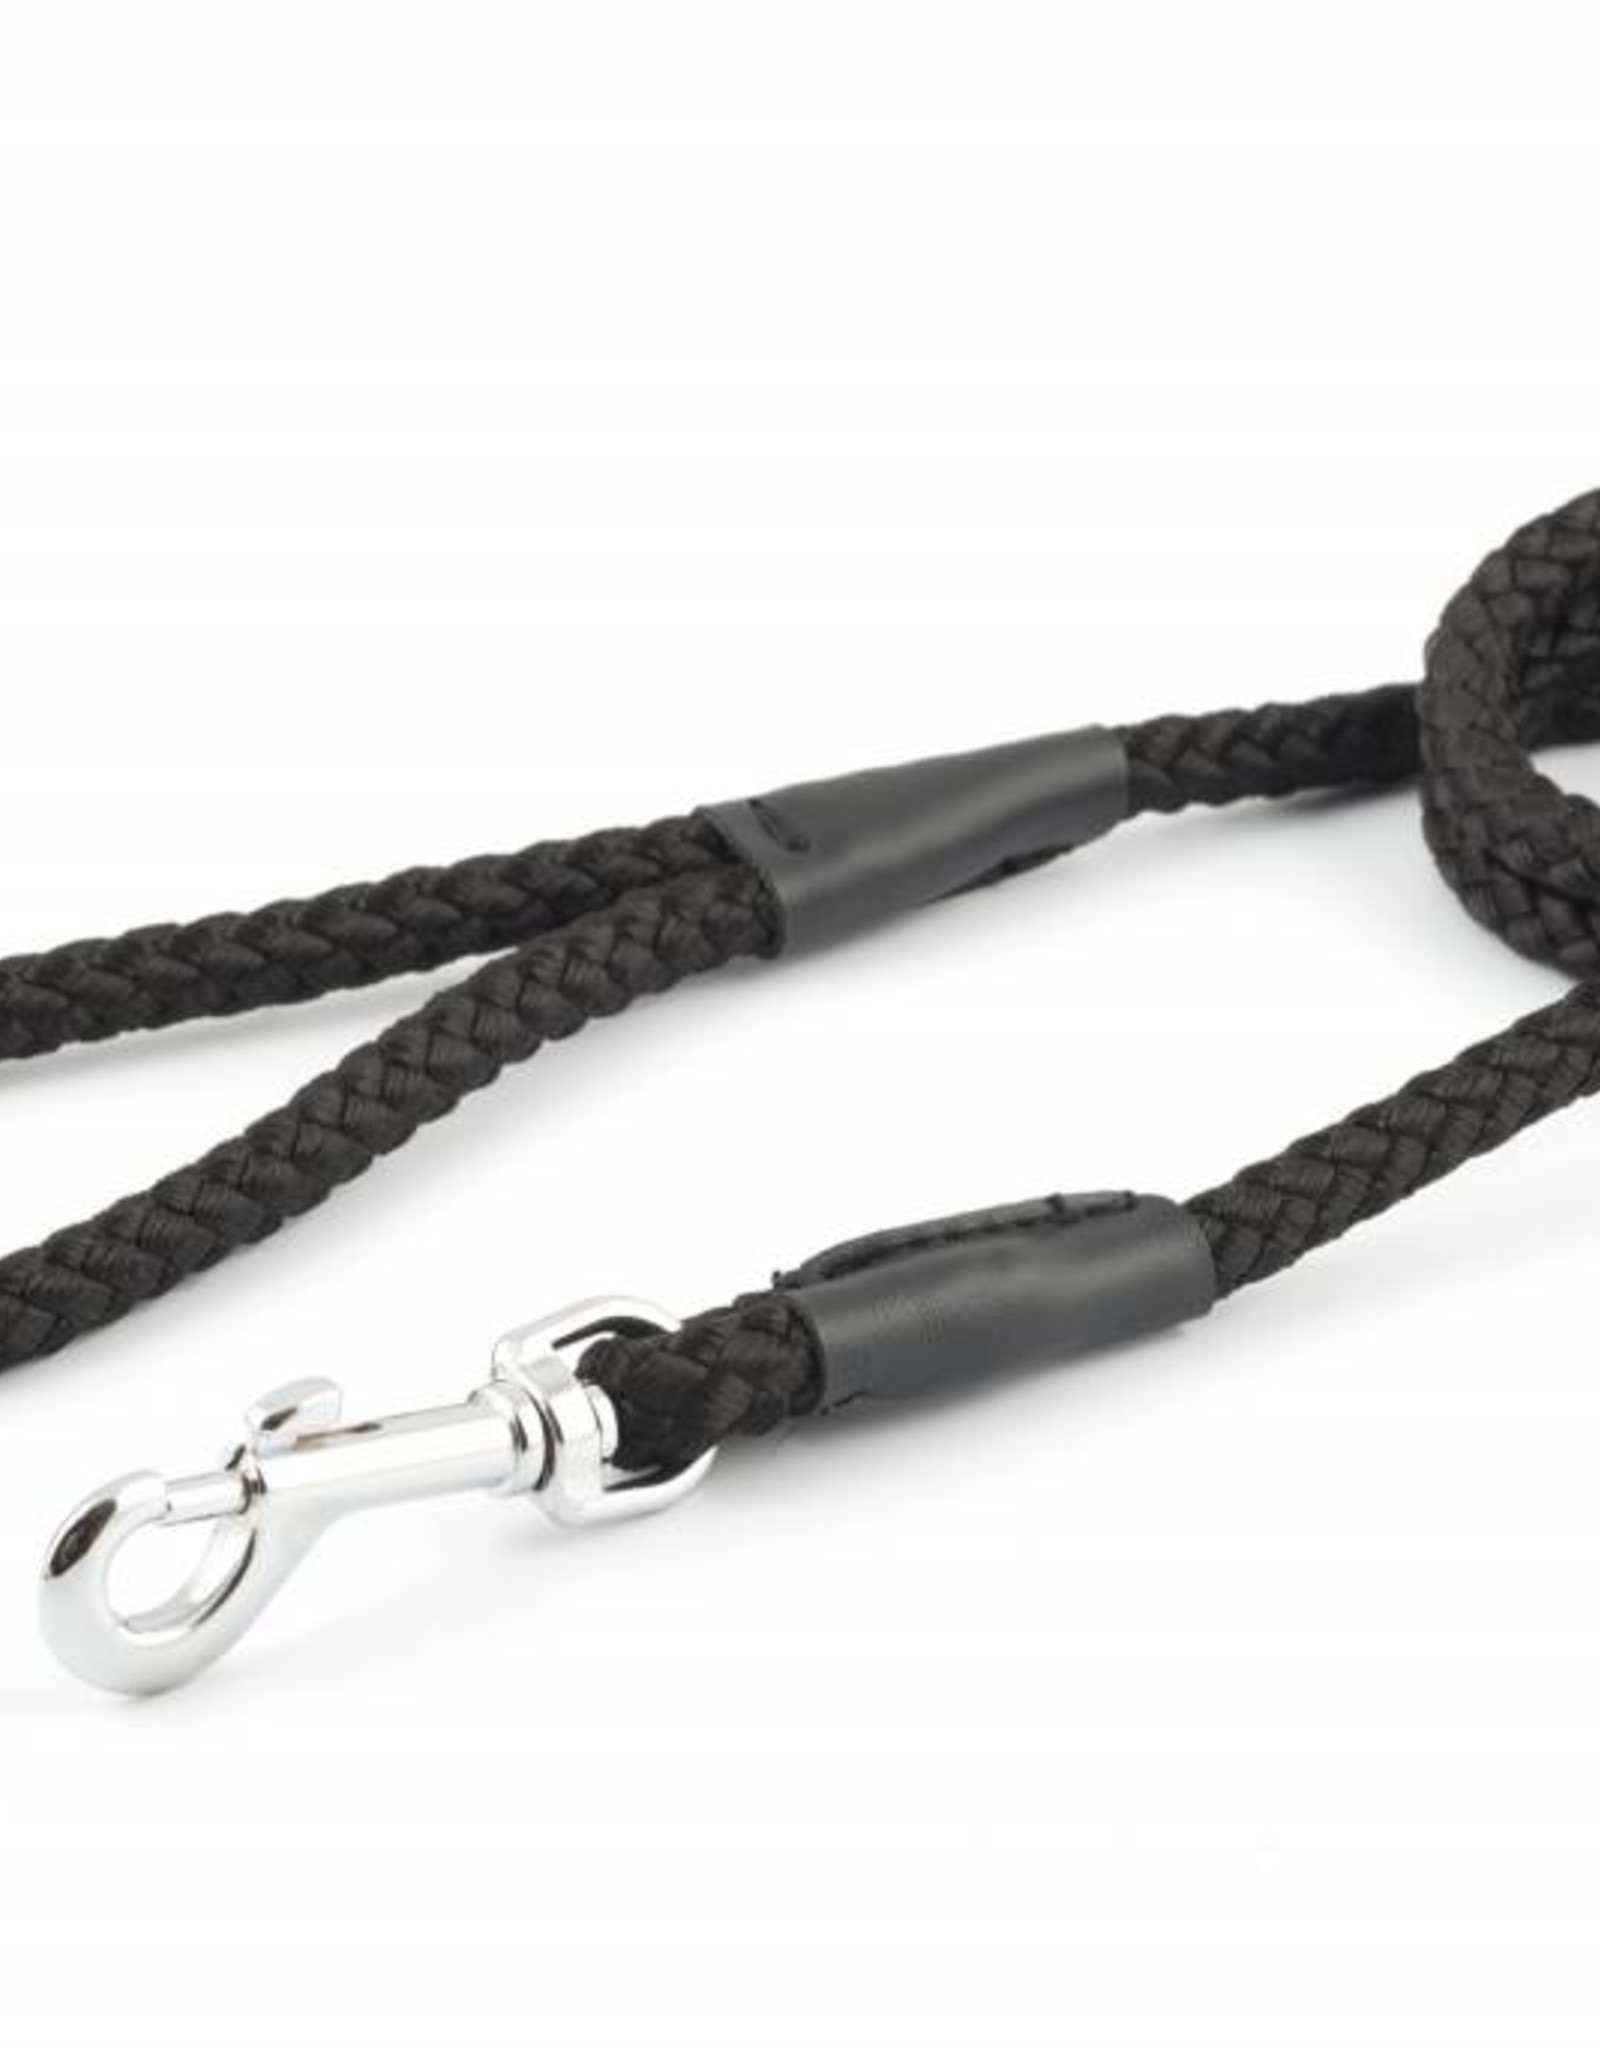 black nylon rope